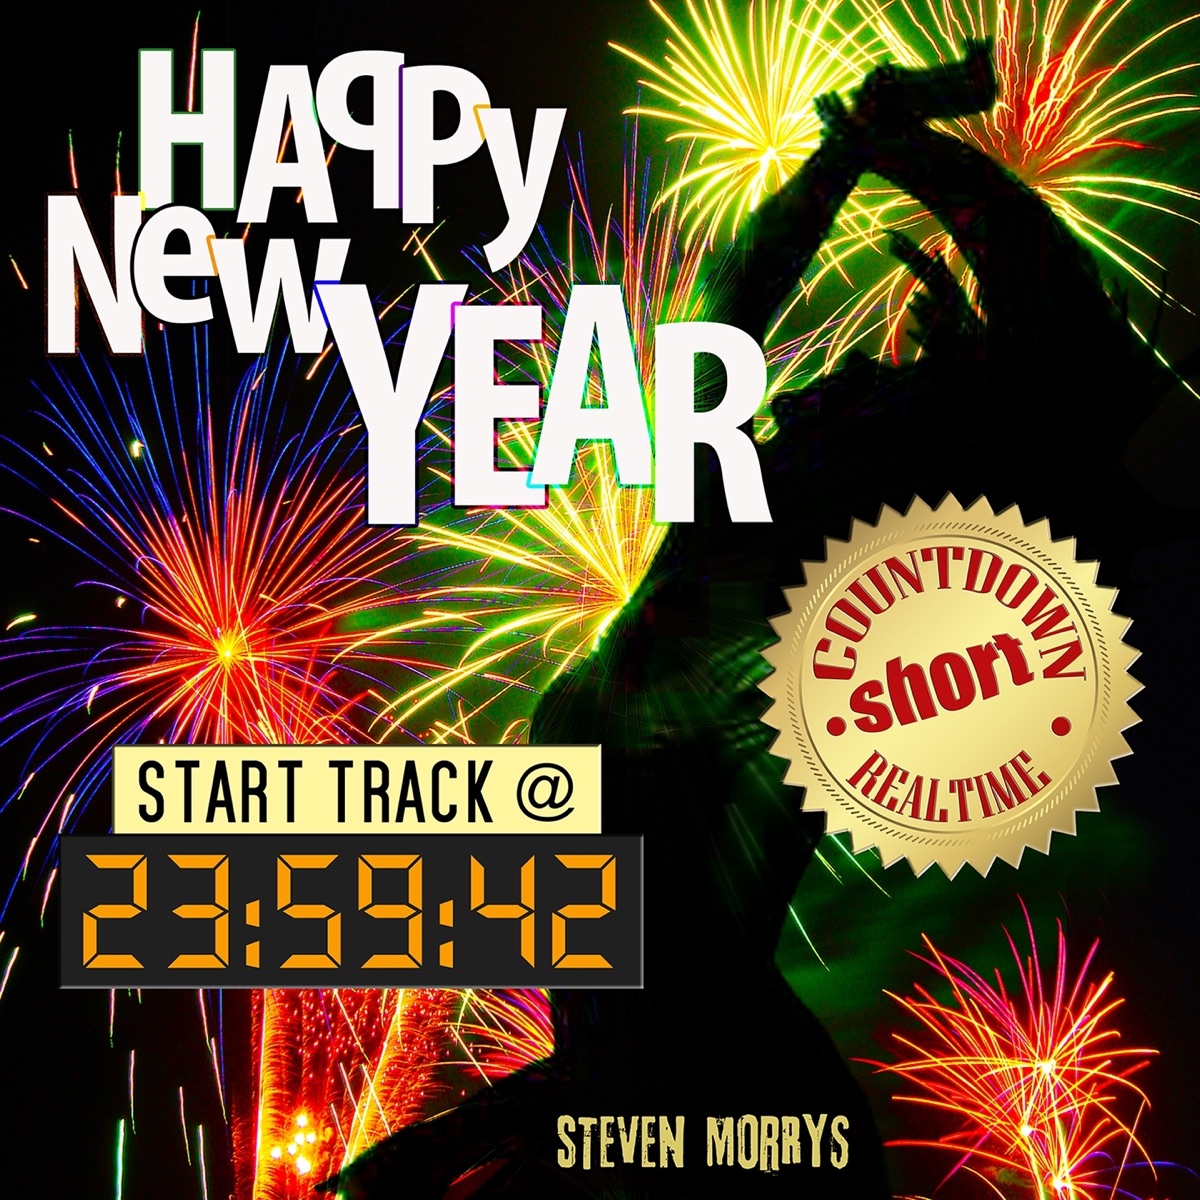 Lære Herre venlig skotsk Happy New Year (Extended Remix) - Single by Steven Morrys on Apple Music